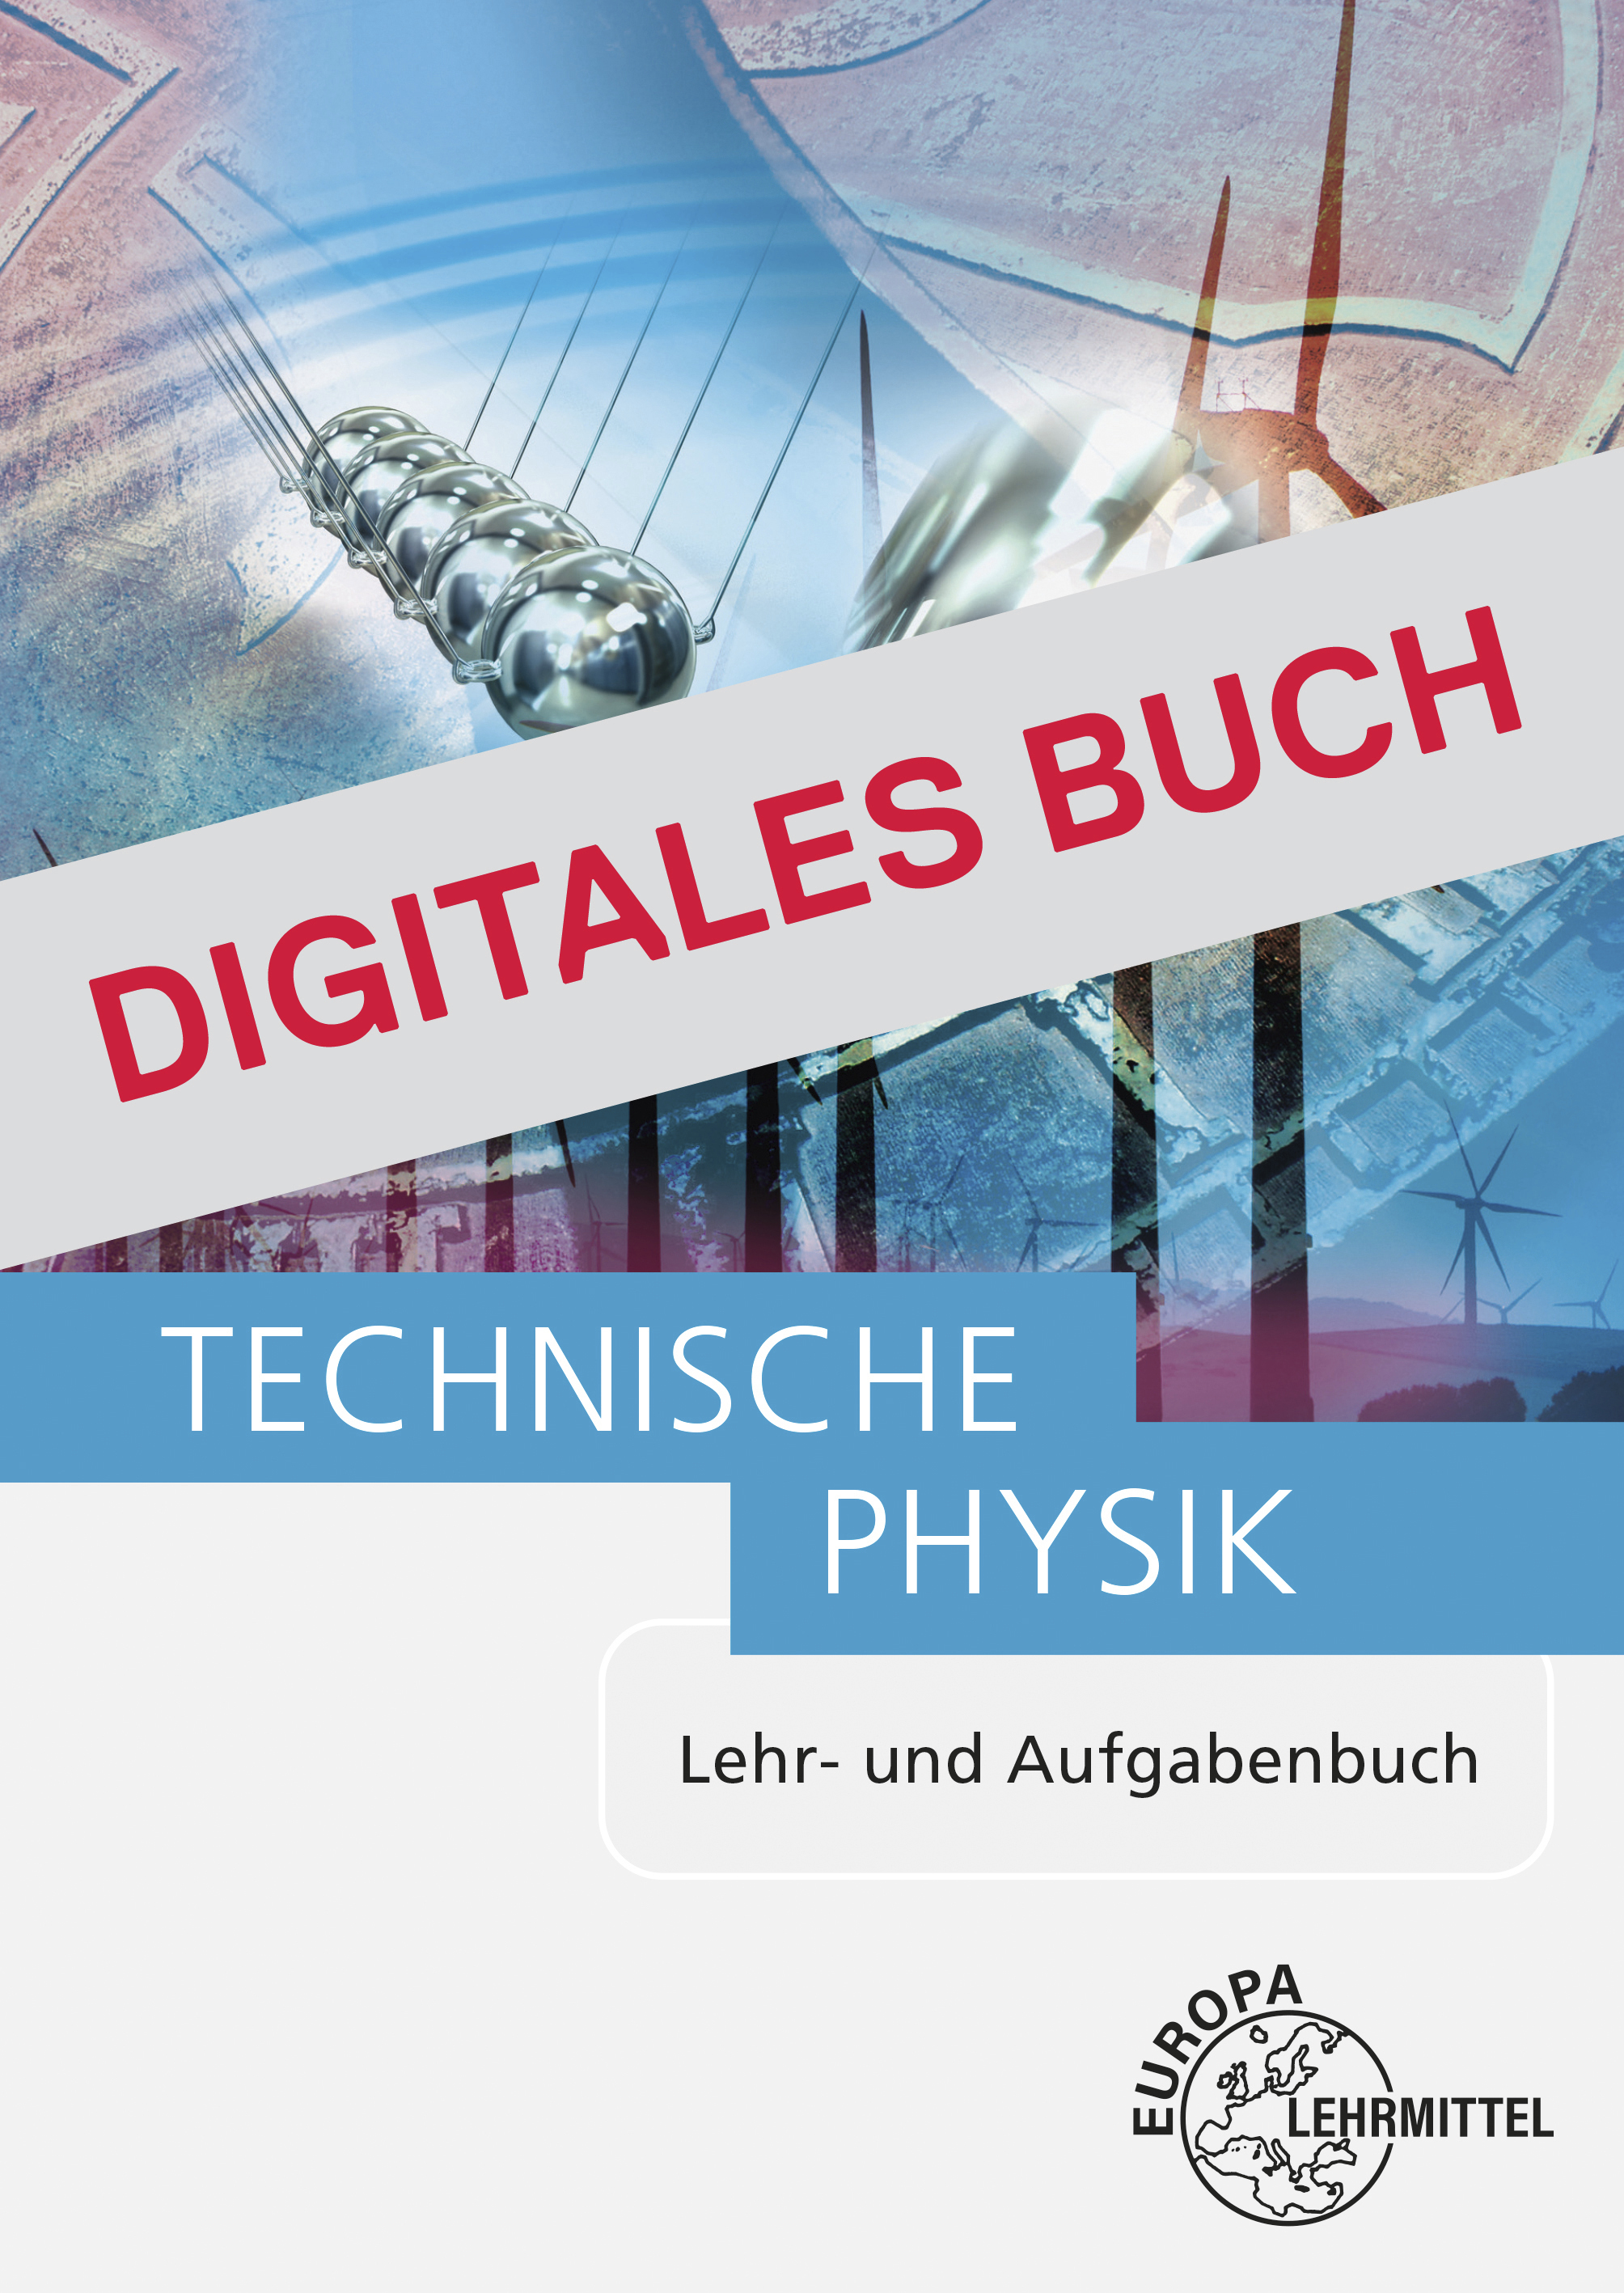 Technische Physik - Digitales Buch